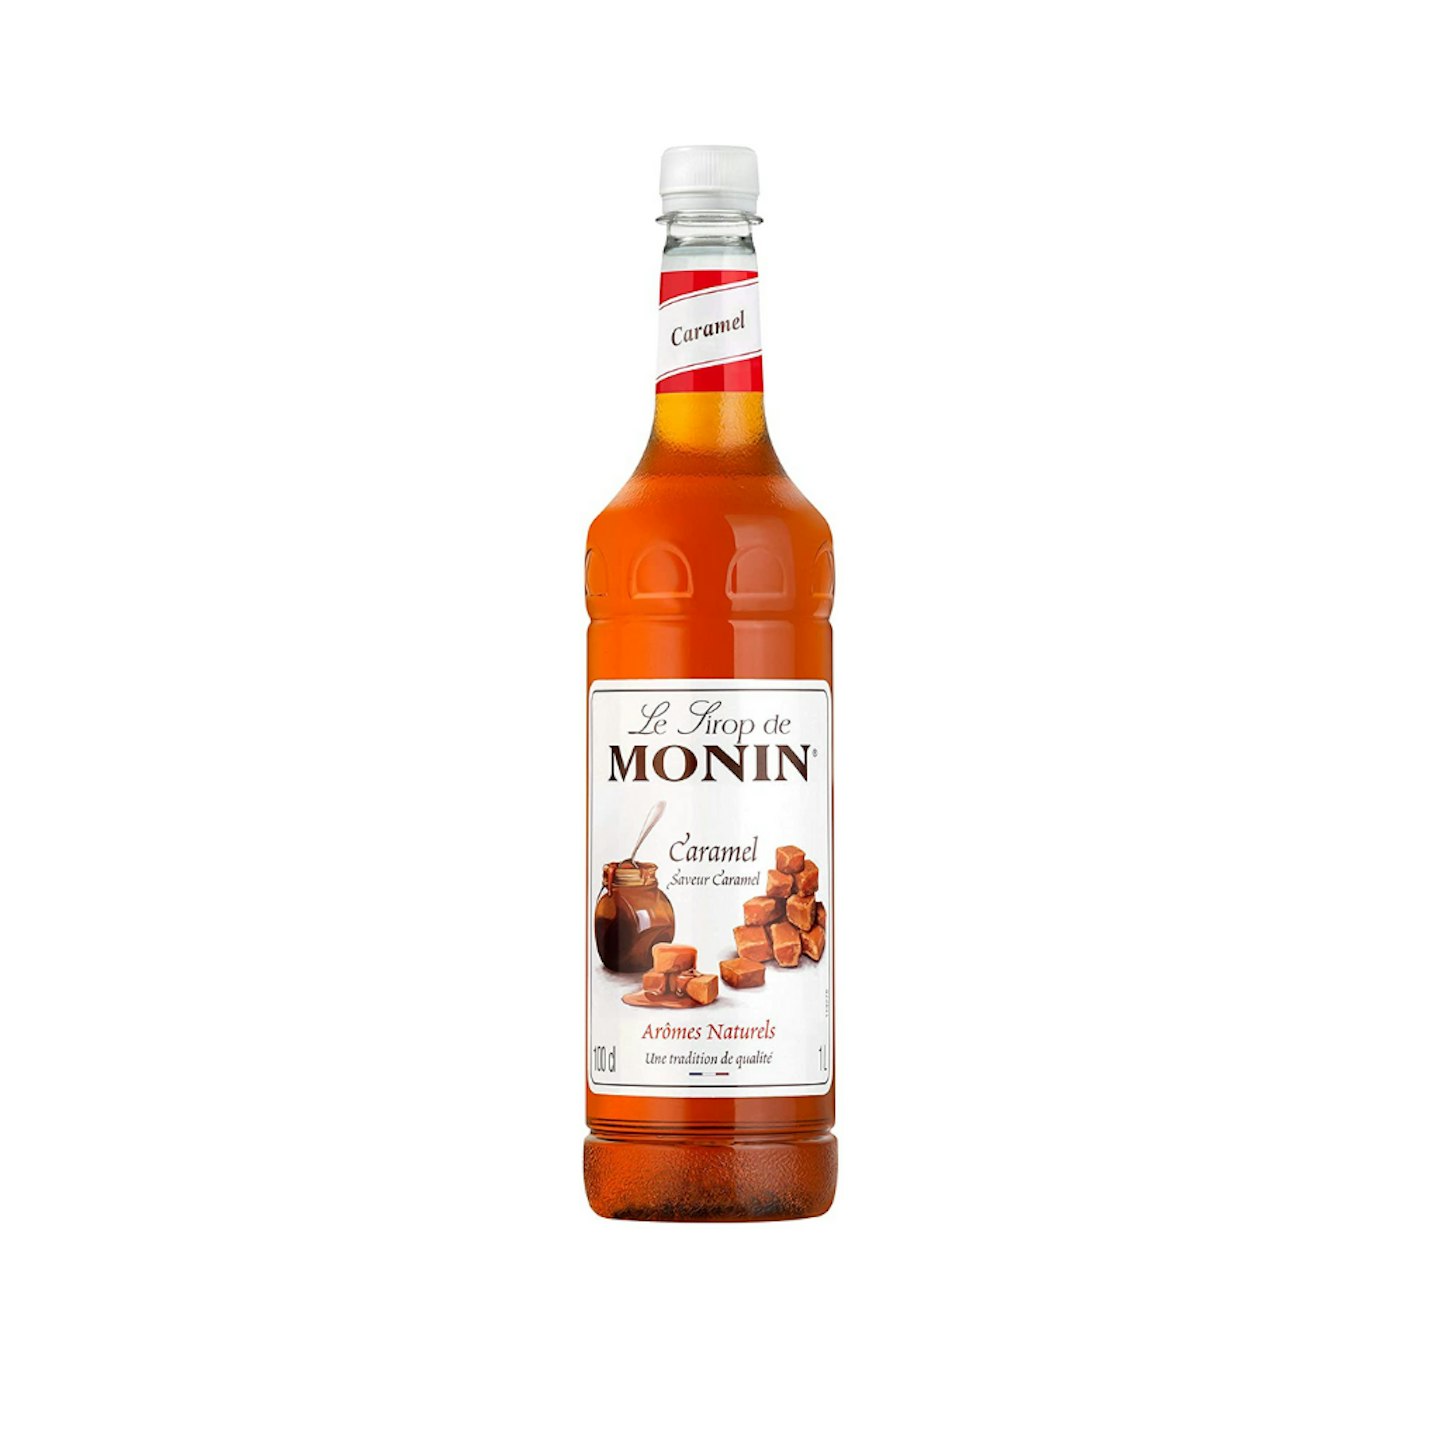 Monin Premium Caramel Syrup 1L